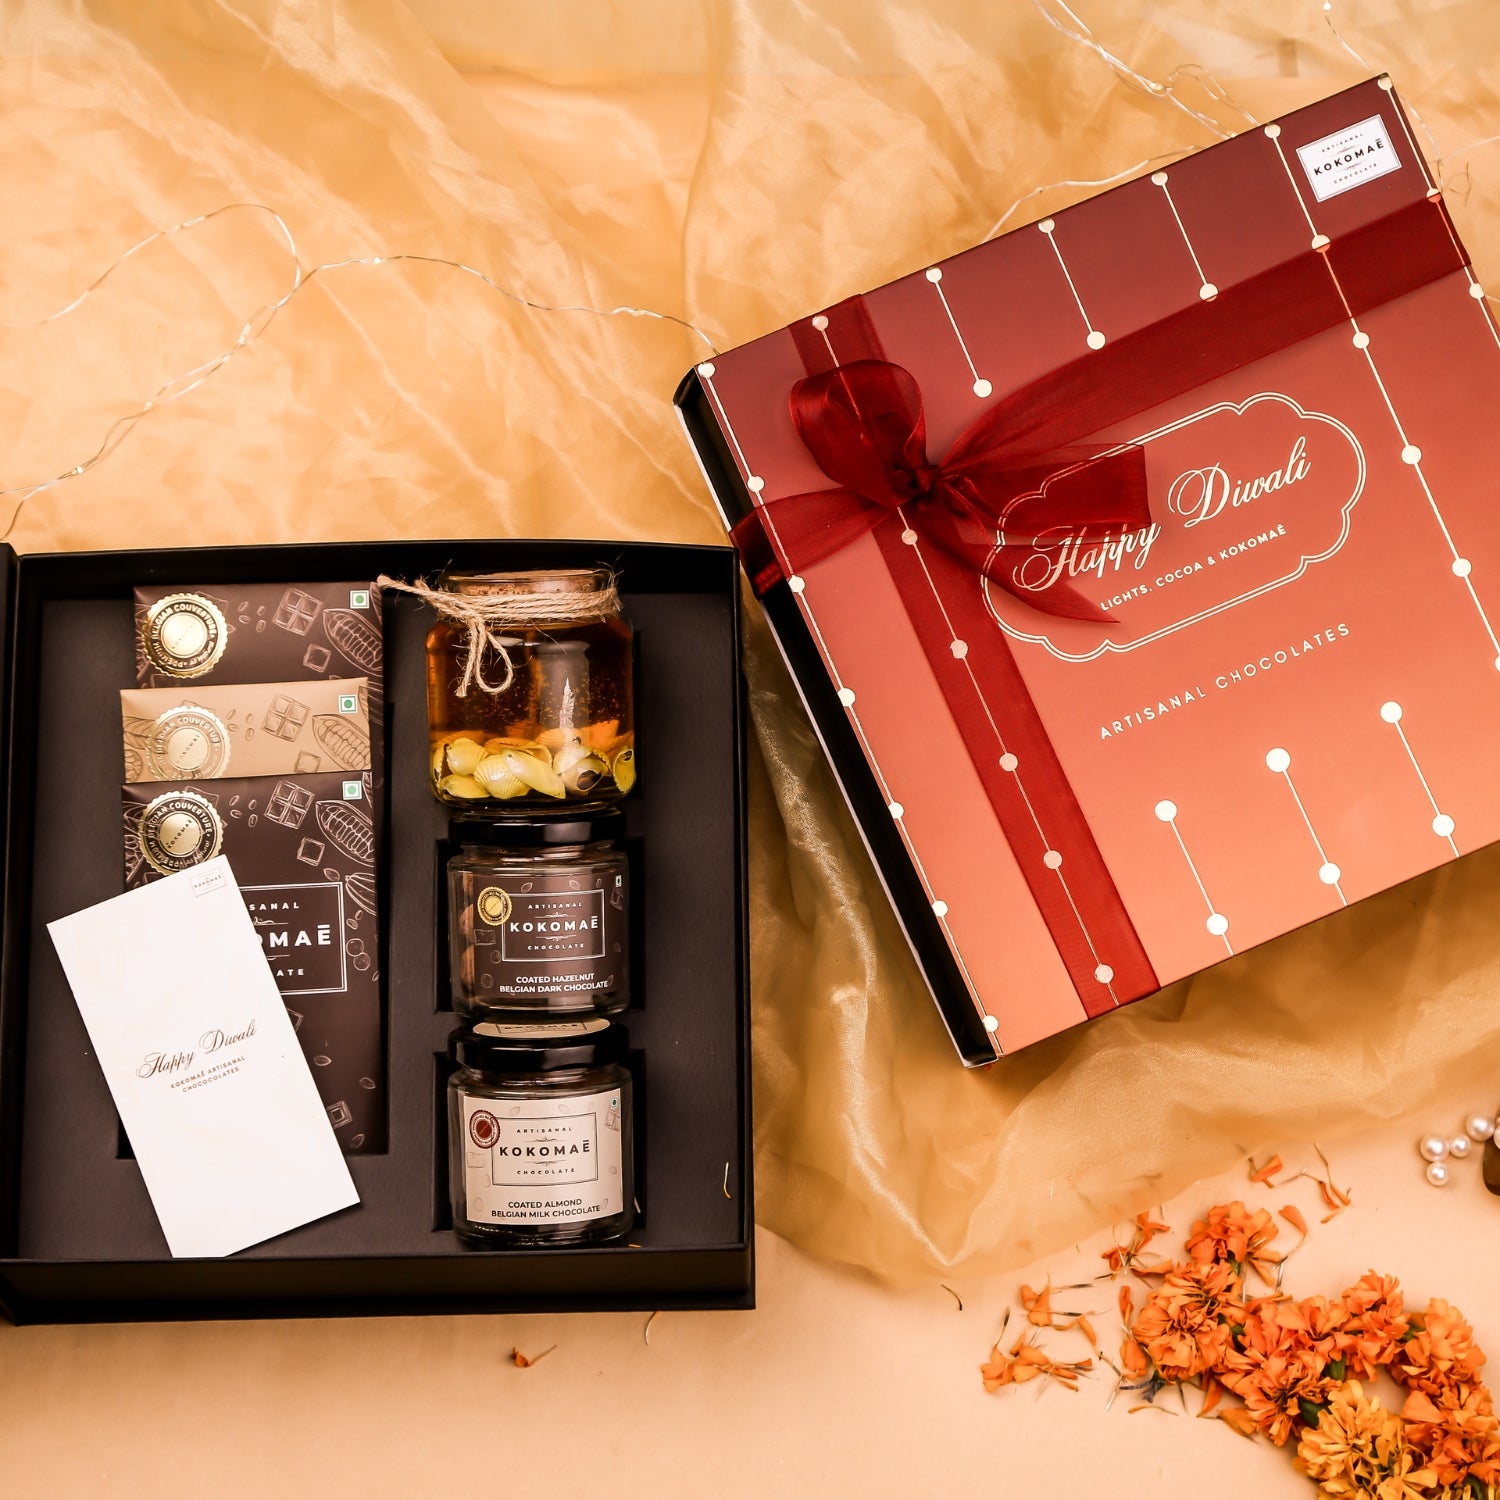 Kokomaē Premium Diwali Gift Box with 3 Belgian Bars, 2 Dragees & a candle